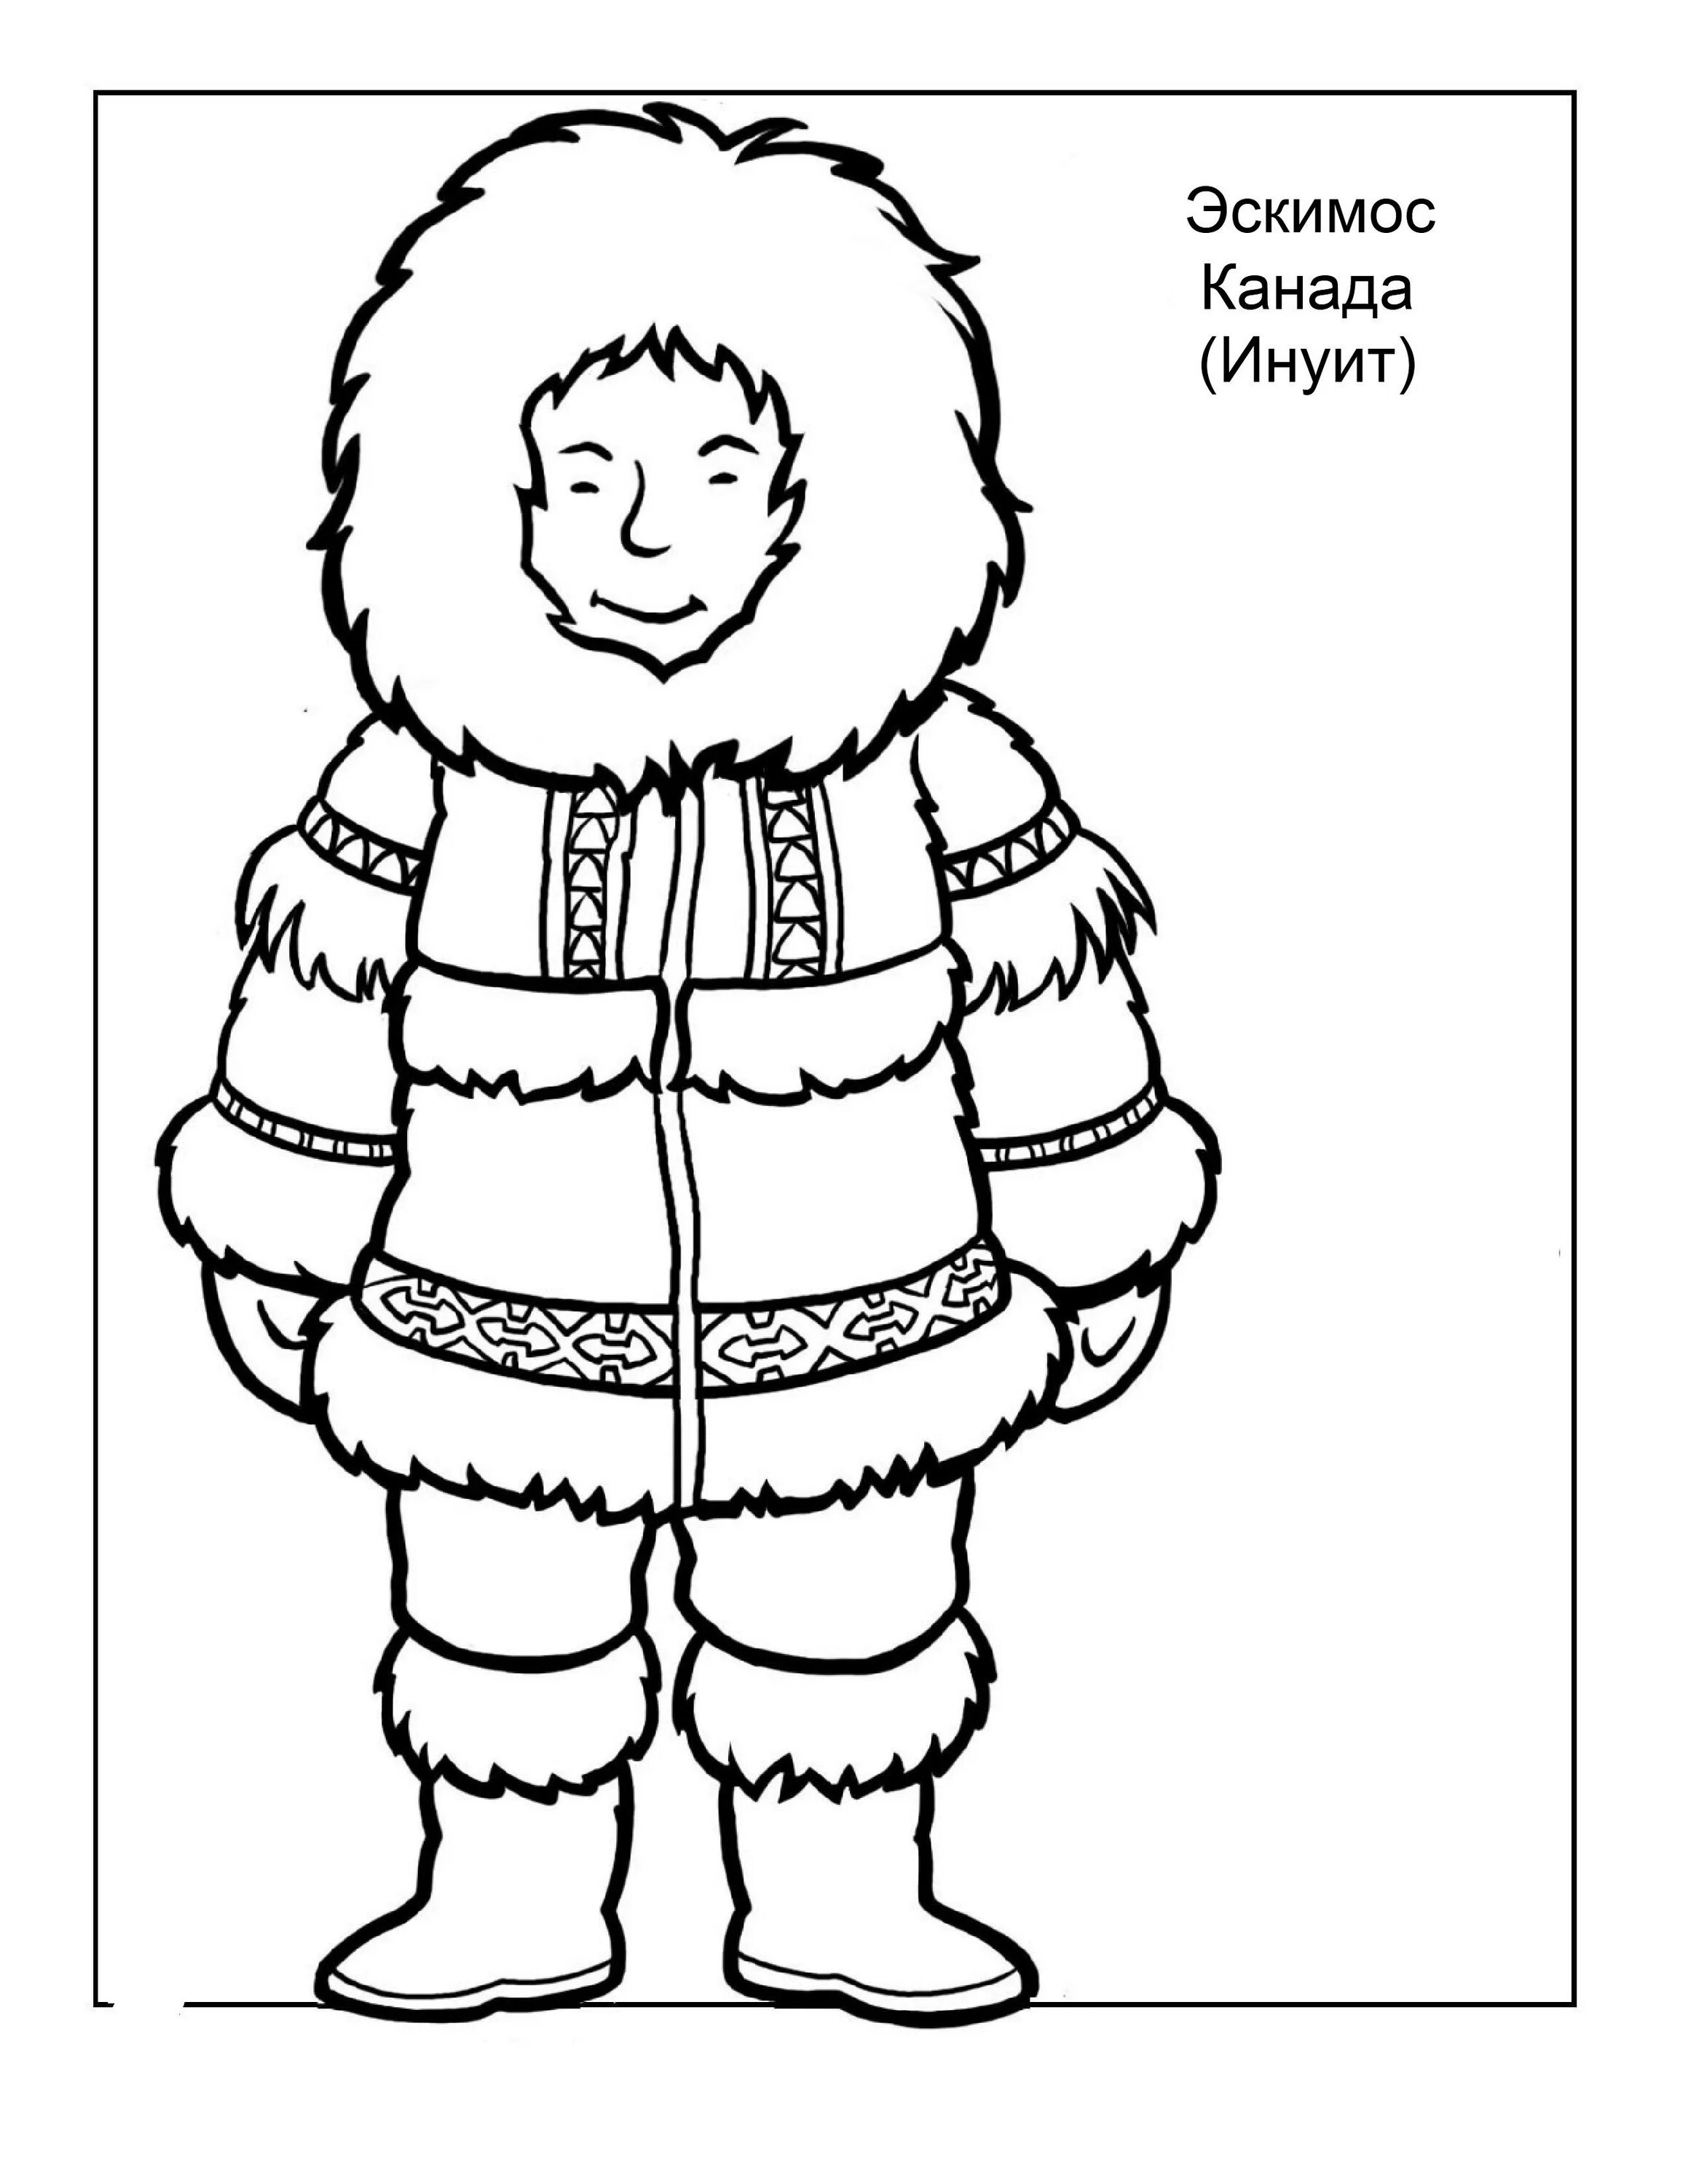 Coloring page charming Chukchi national costume